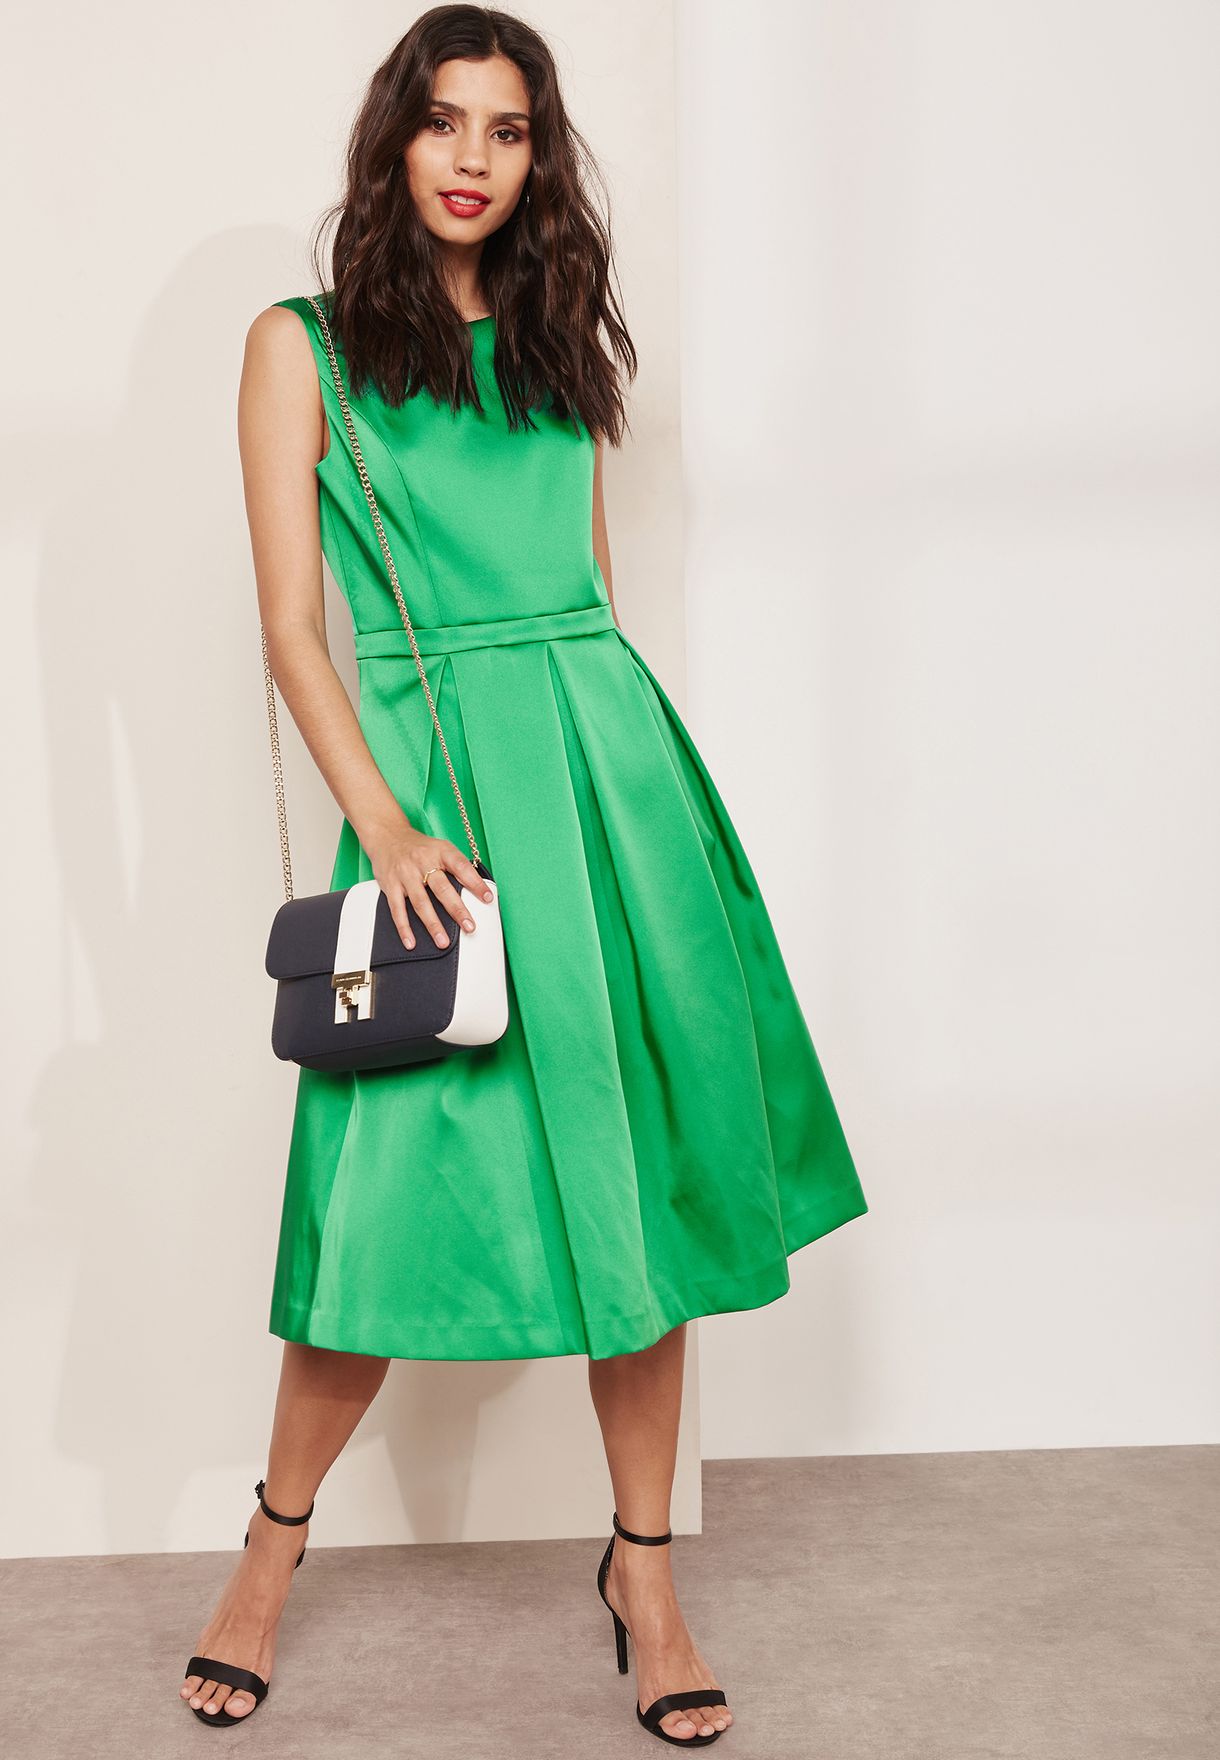 Tommy Hilfiger Green Dress Clearance Cheap, Save 63% | jlcatj.gob.mx